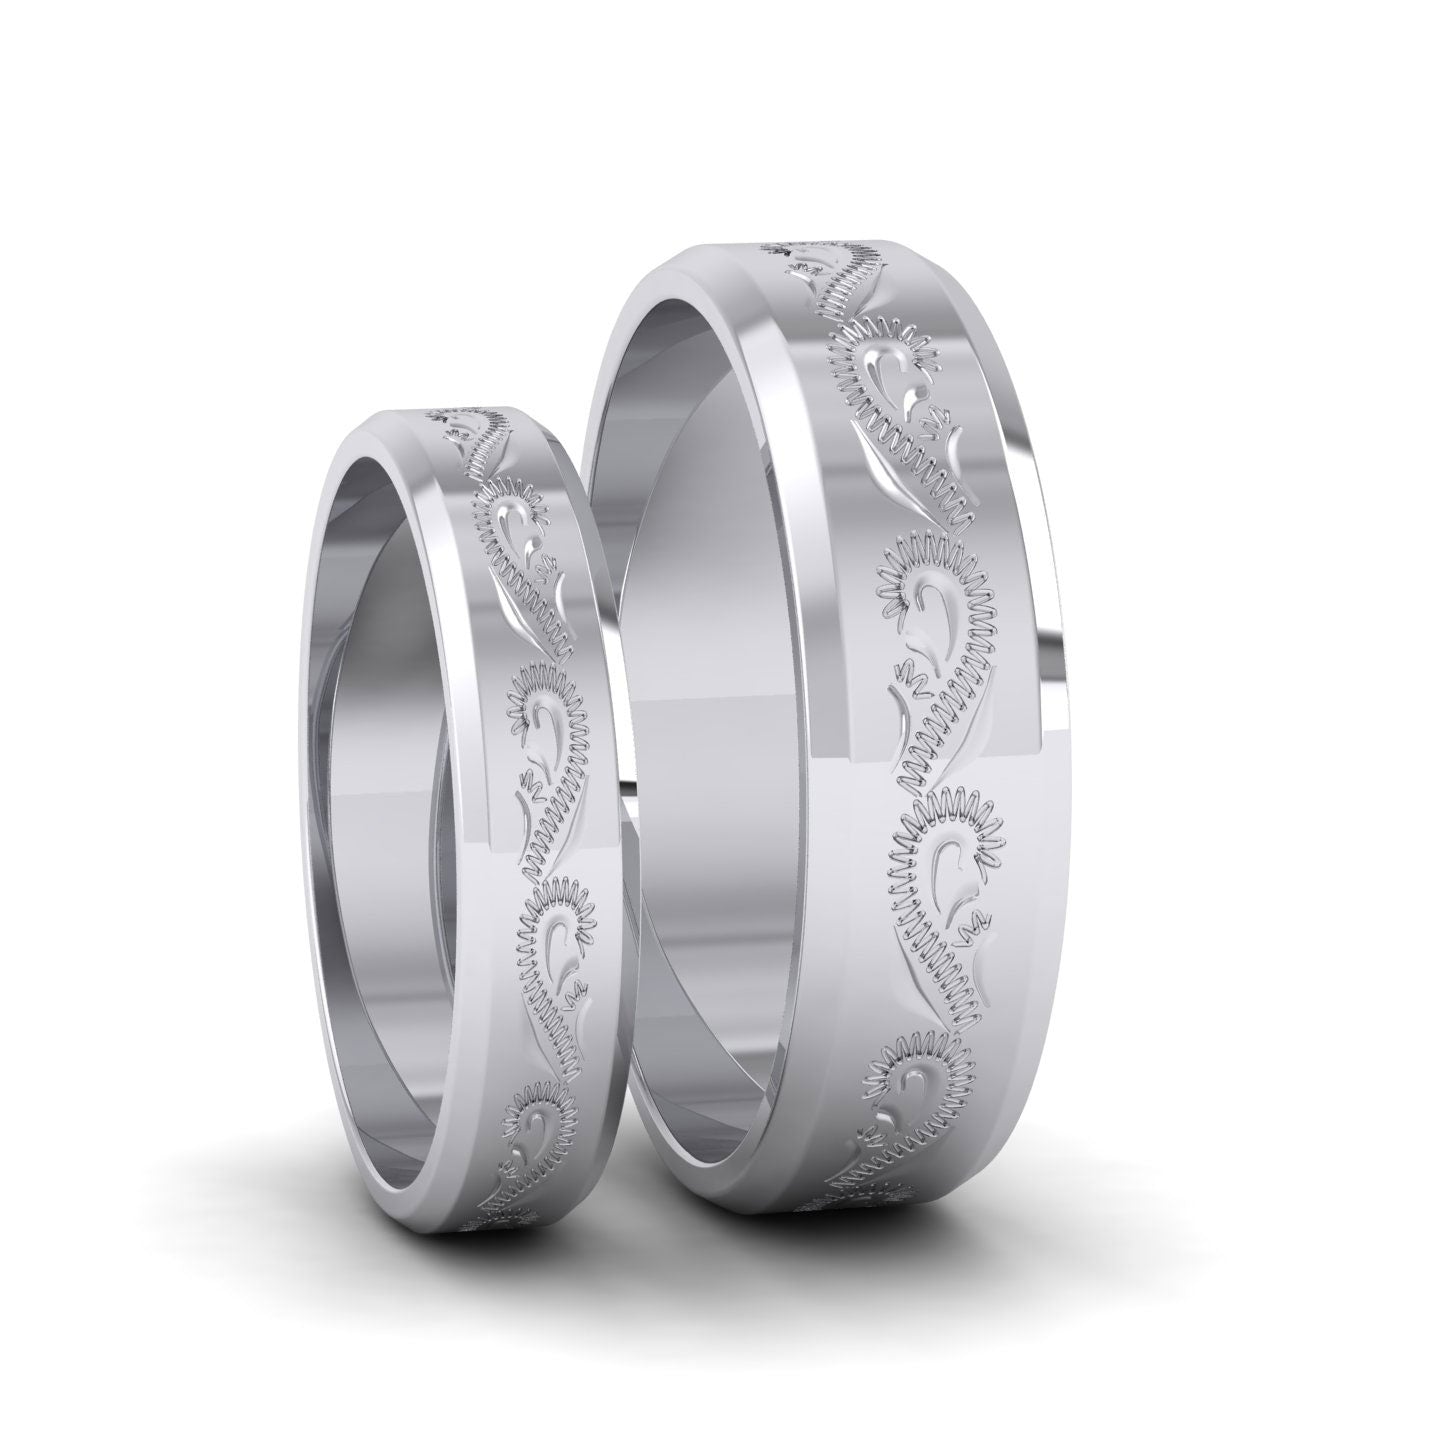 Engraved 950 Platinum 4mm Flat Wedding Ring With Bevelled Edge